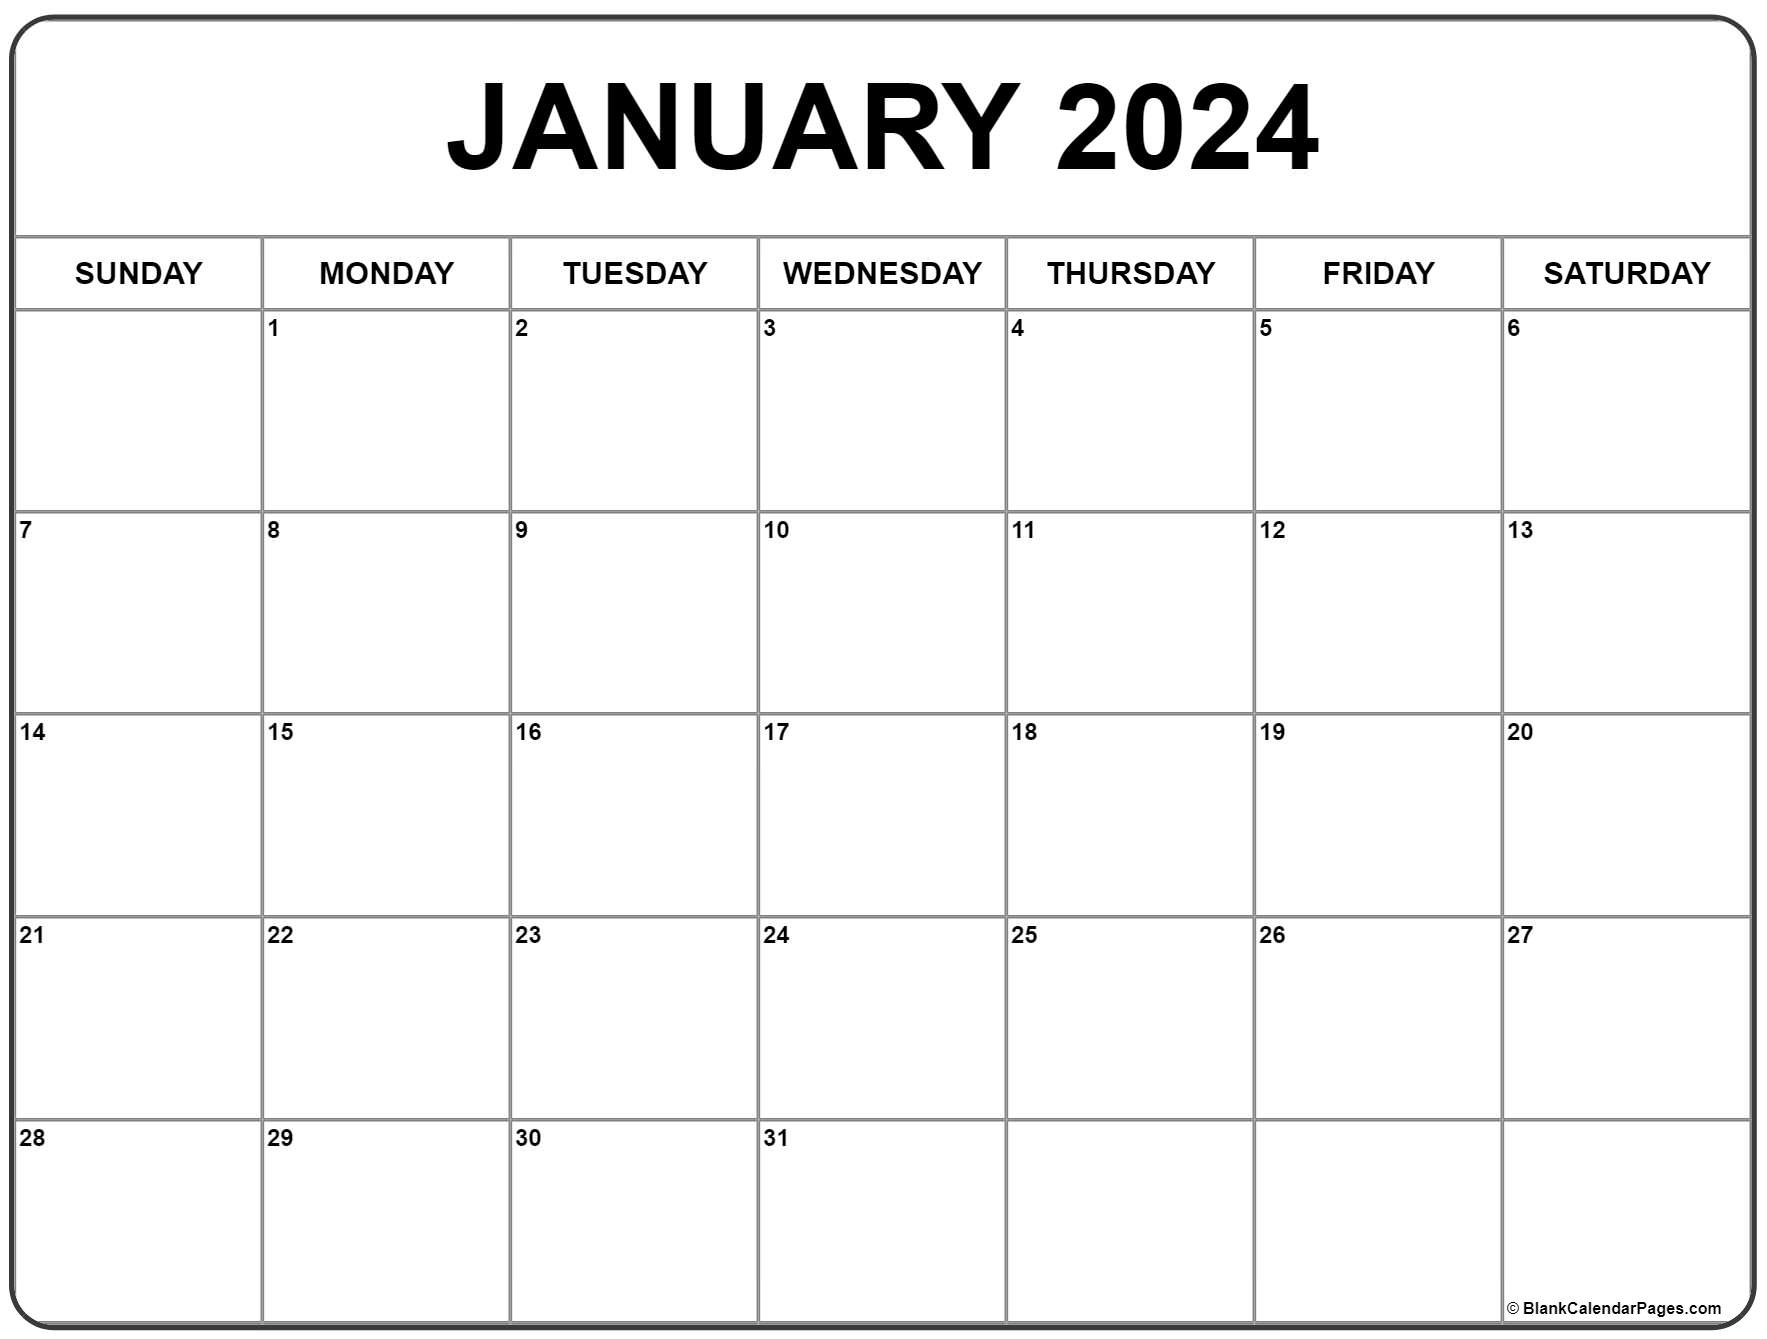 January 2024 Calendar | Free Printable Calendar for Free Calendar January 2024 Printable